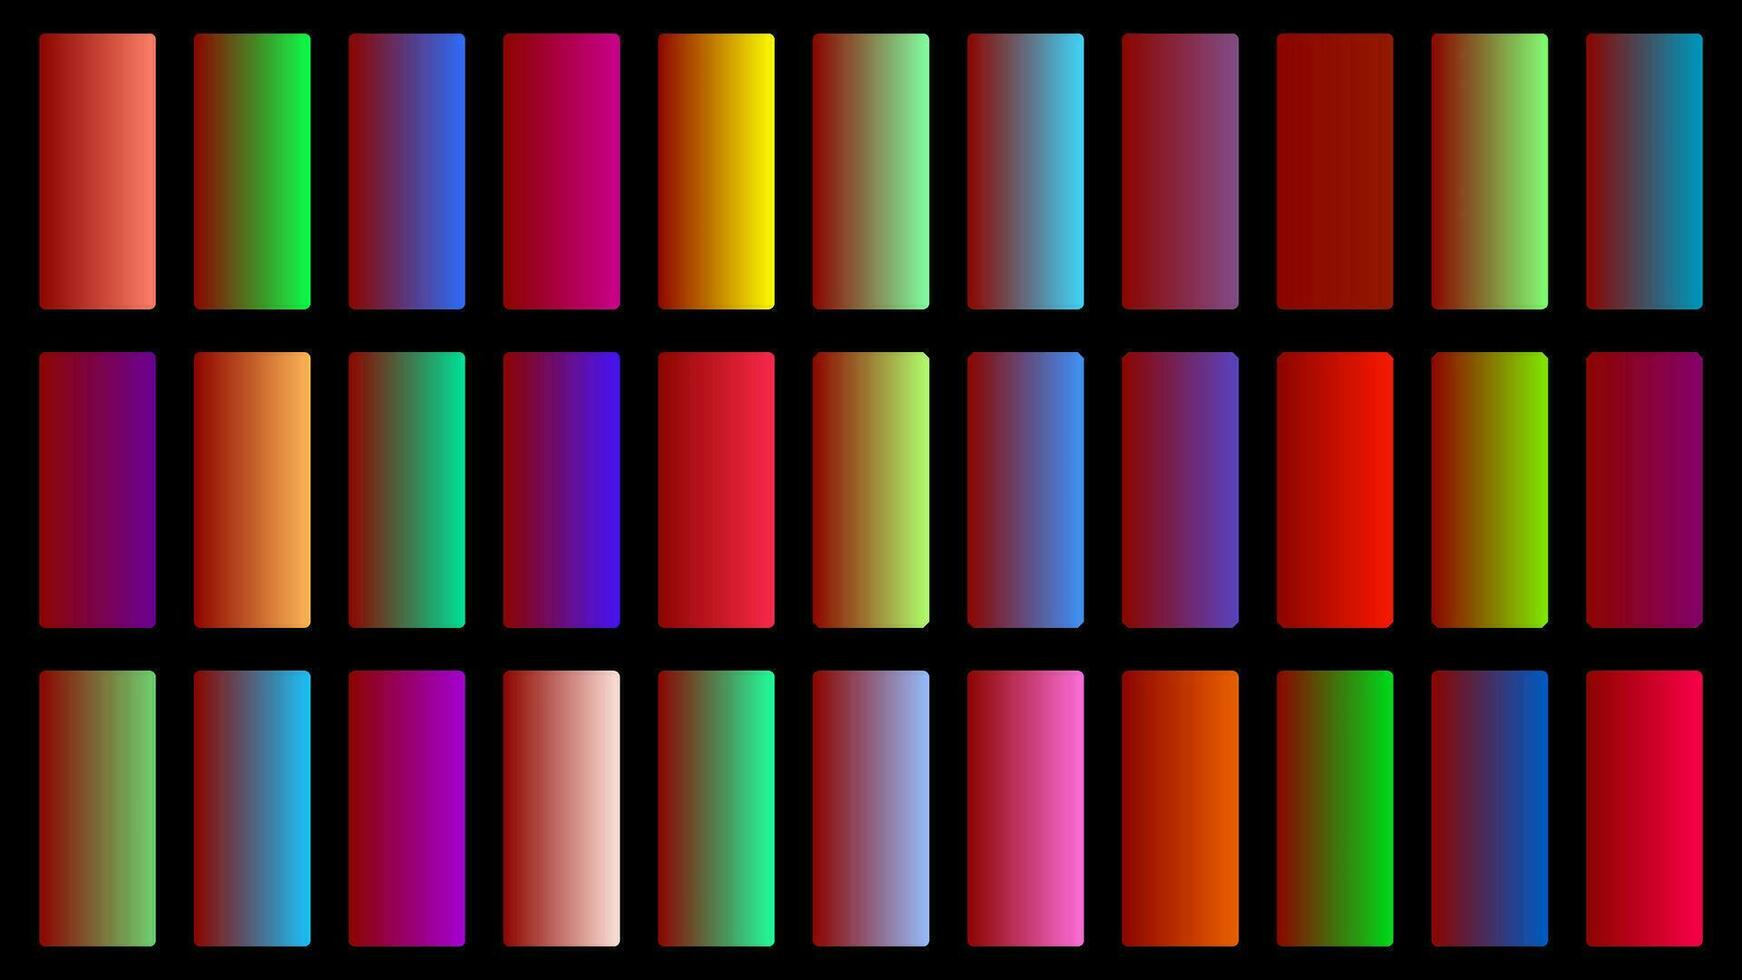 colorida rubi cor sombra linear gradiente paleta amostras rede kit arredondado retângulos modelo conjunto vetor